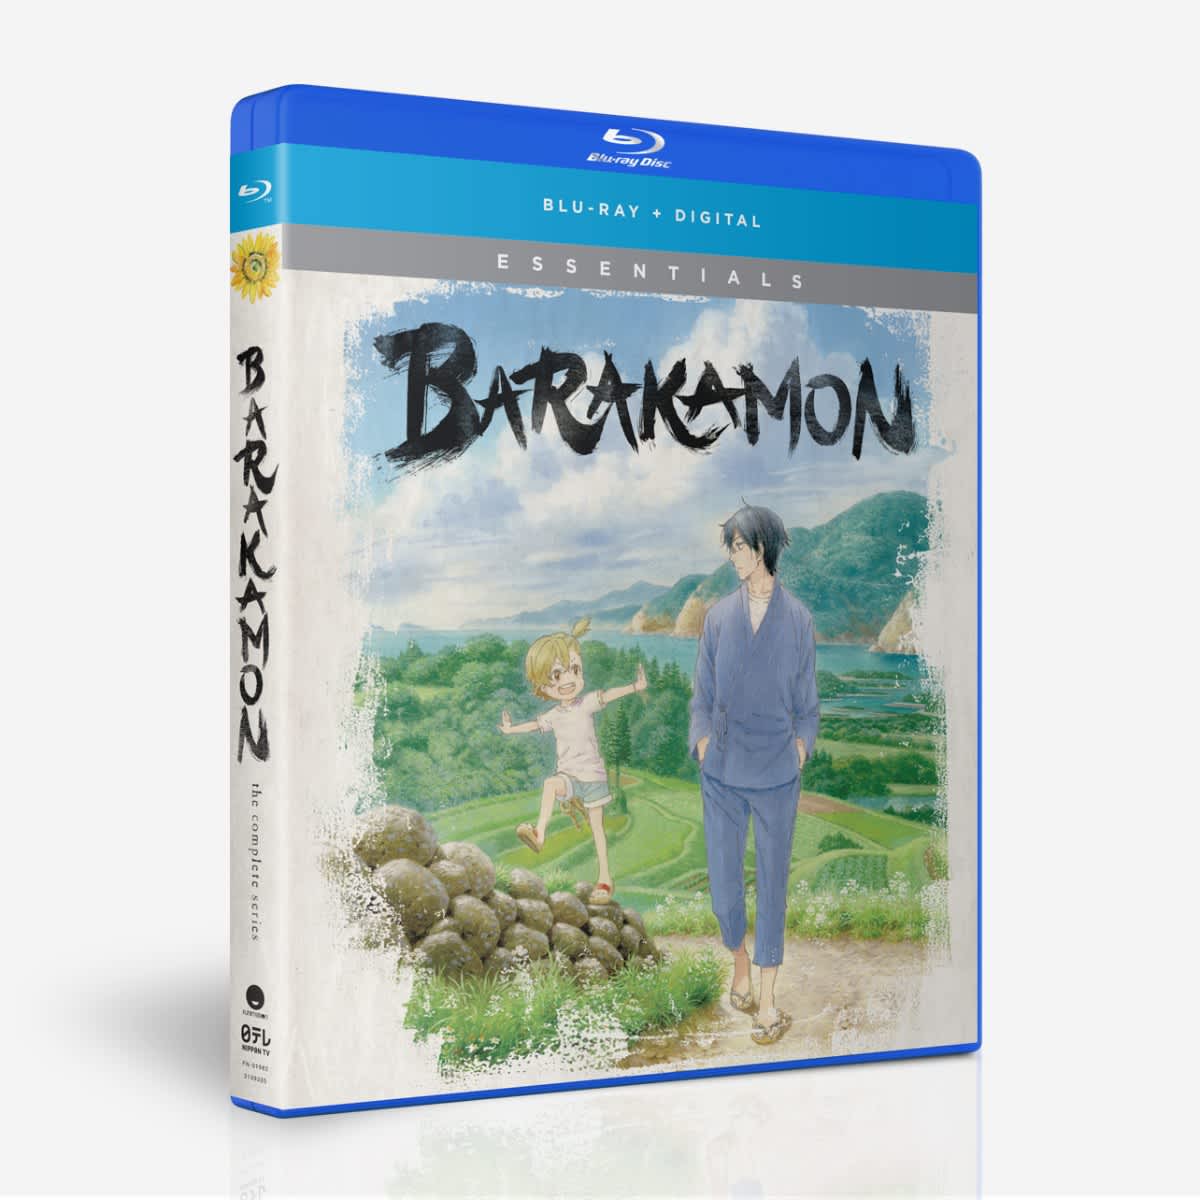 Barakamon Trailer 